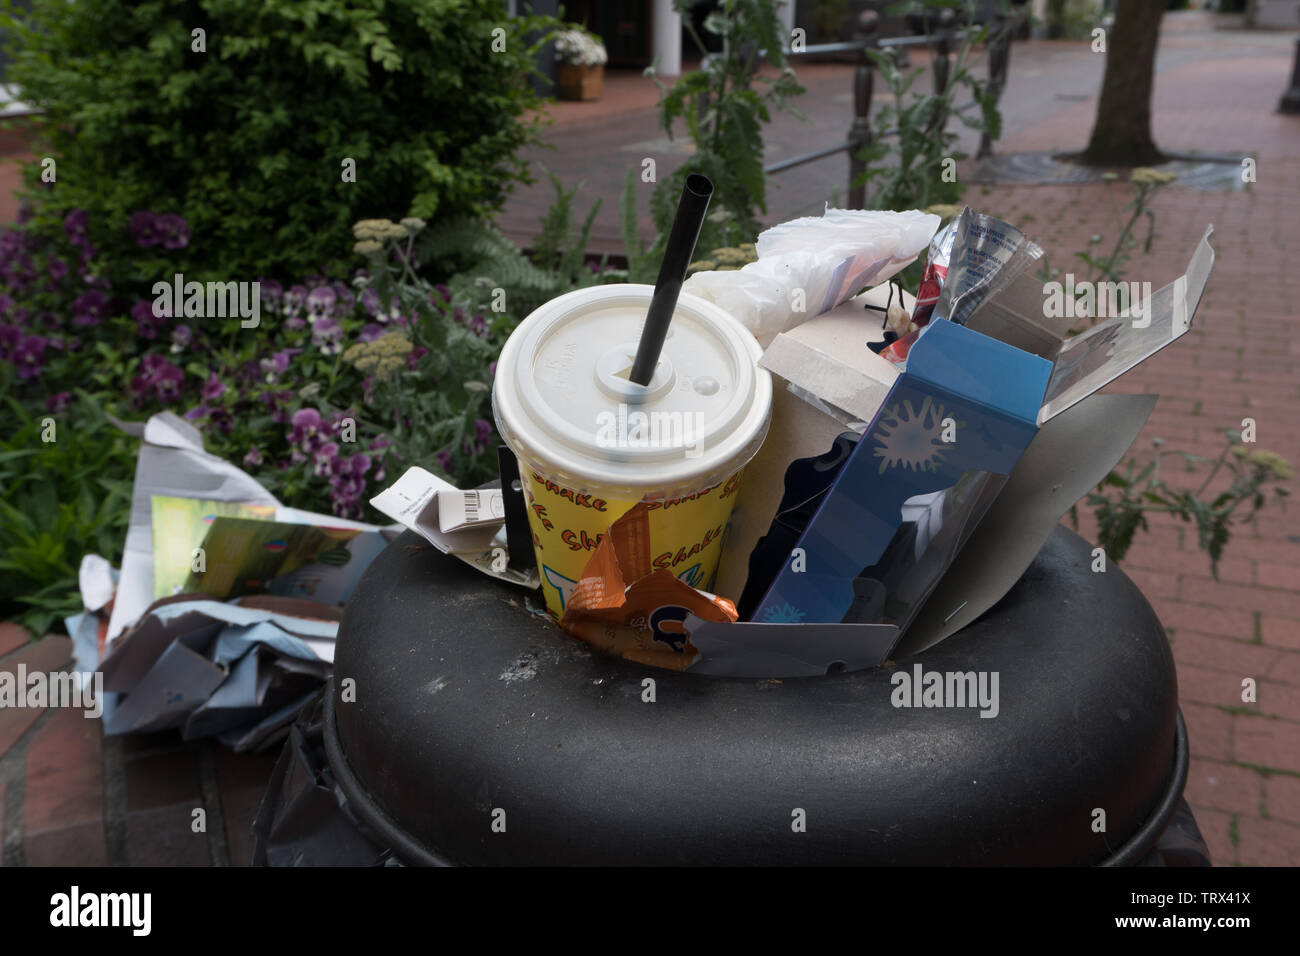 Rubbish in overflowing public bin. Wittmund. East Frisia. Germany Stock Photo